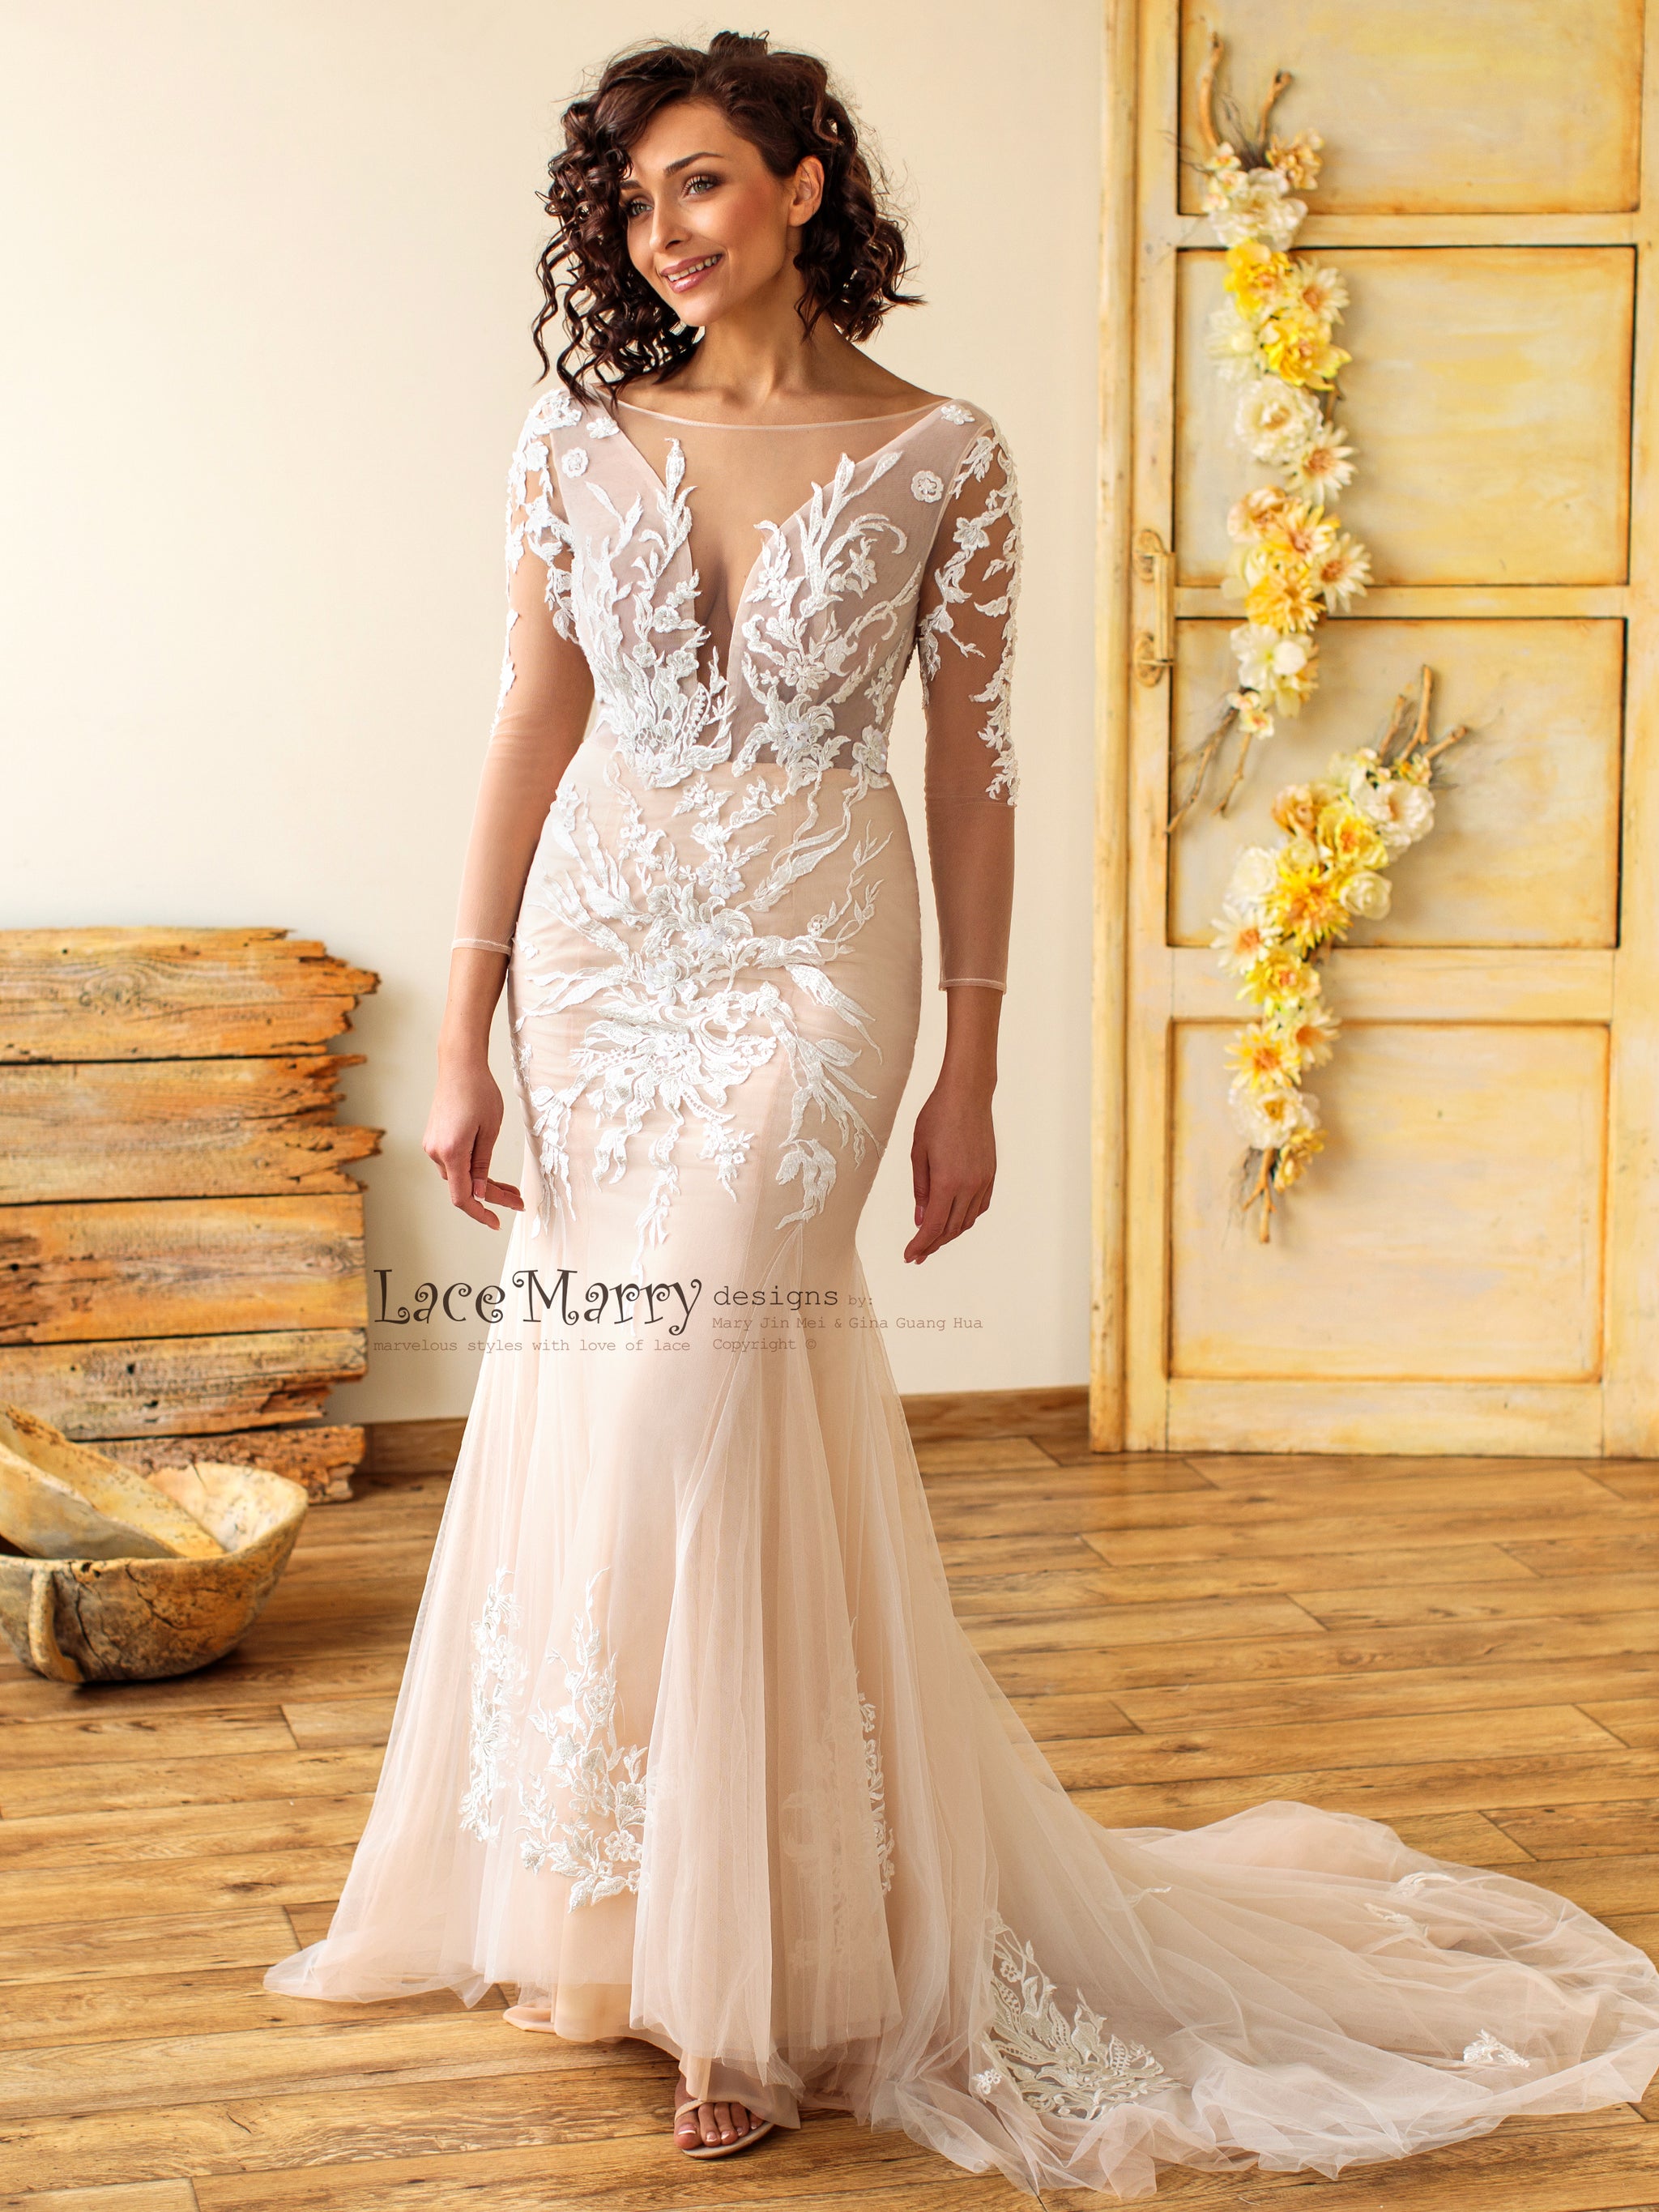 Princess Wedding Dresses 2020 Beaded Strapless Ball Gown Bride Dress v –  TANYA BRIDAL